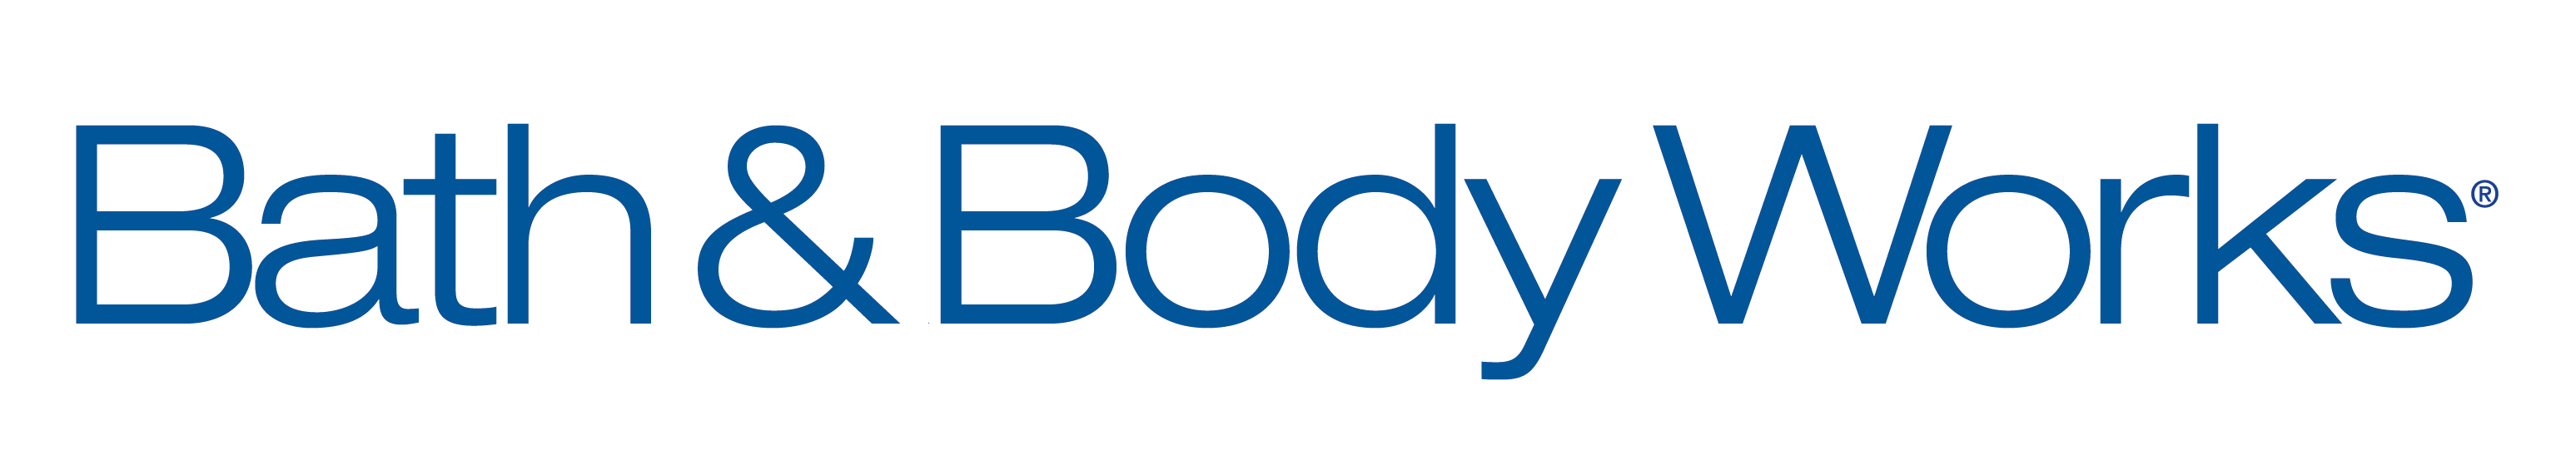 Corporate Website | Bath & Body Works, Inc.